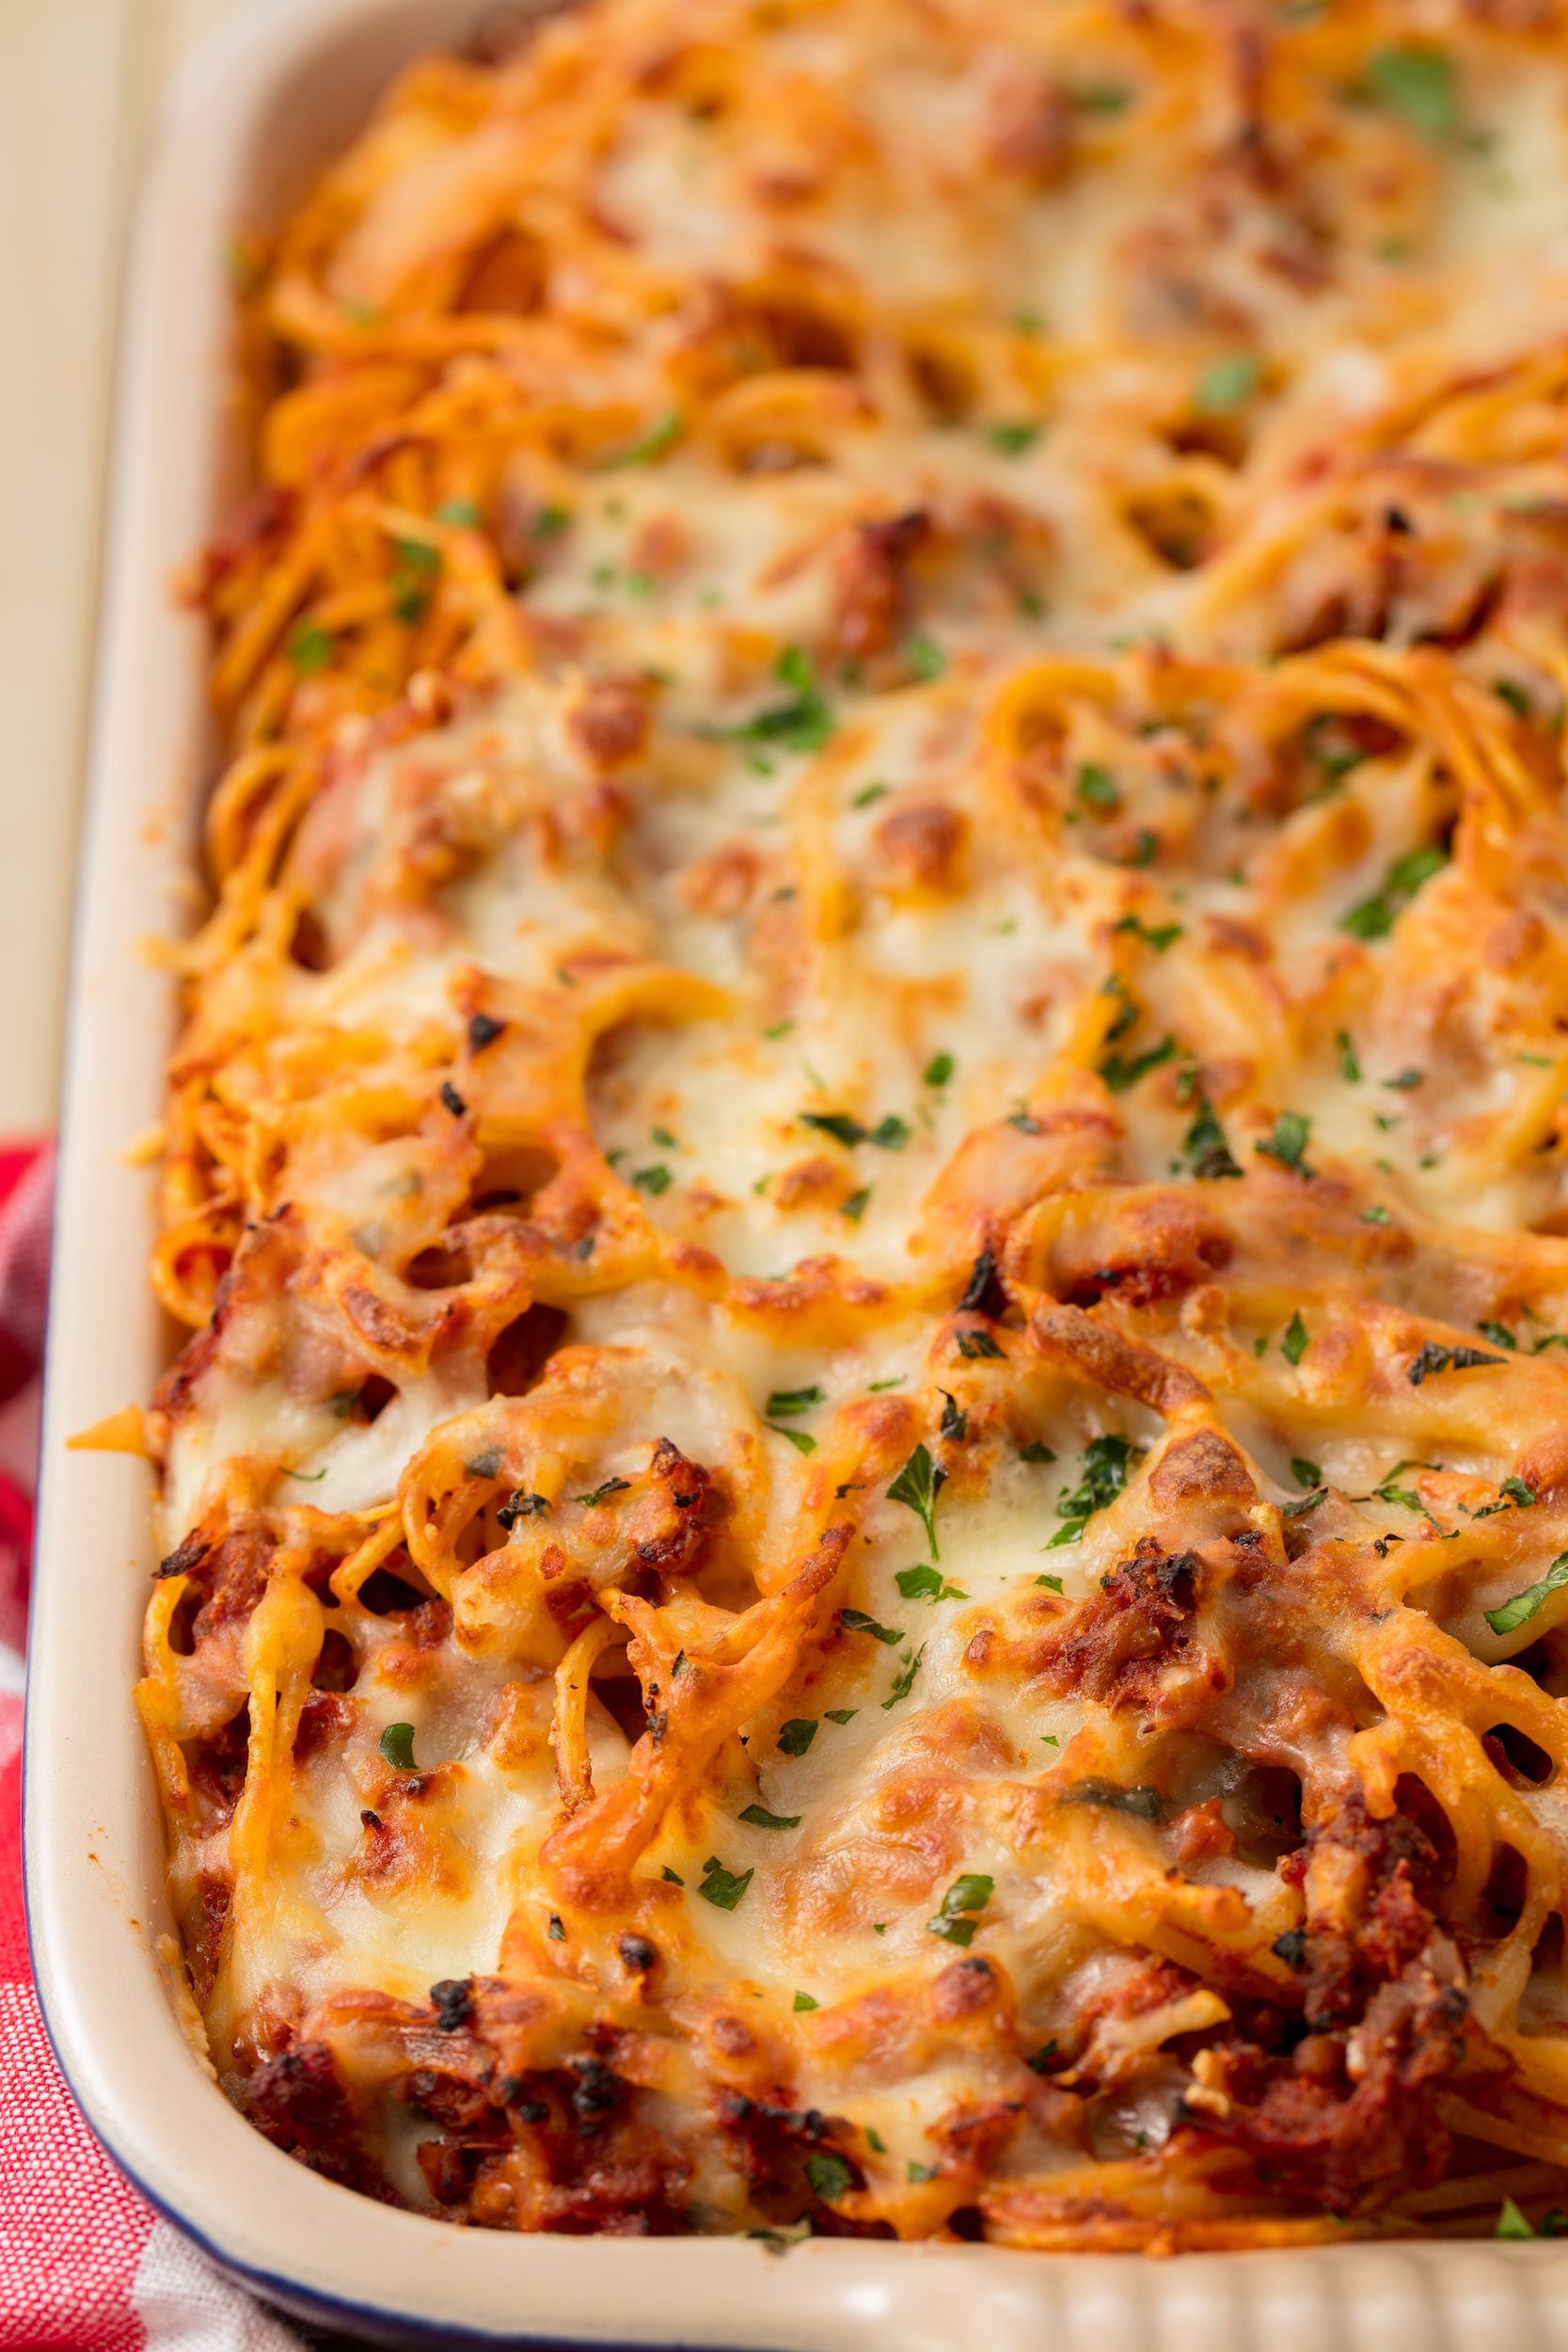 Best Baked Spaghetti Recipe - How to Make Baked Spaghetti Casserole